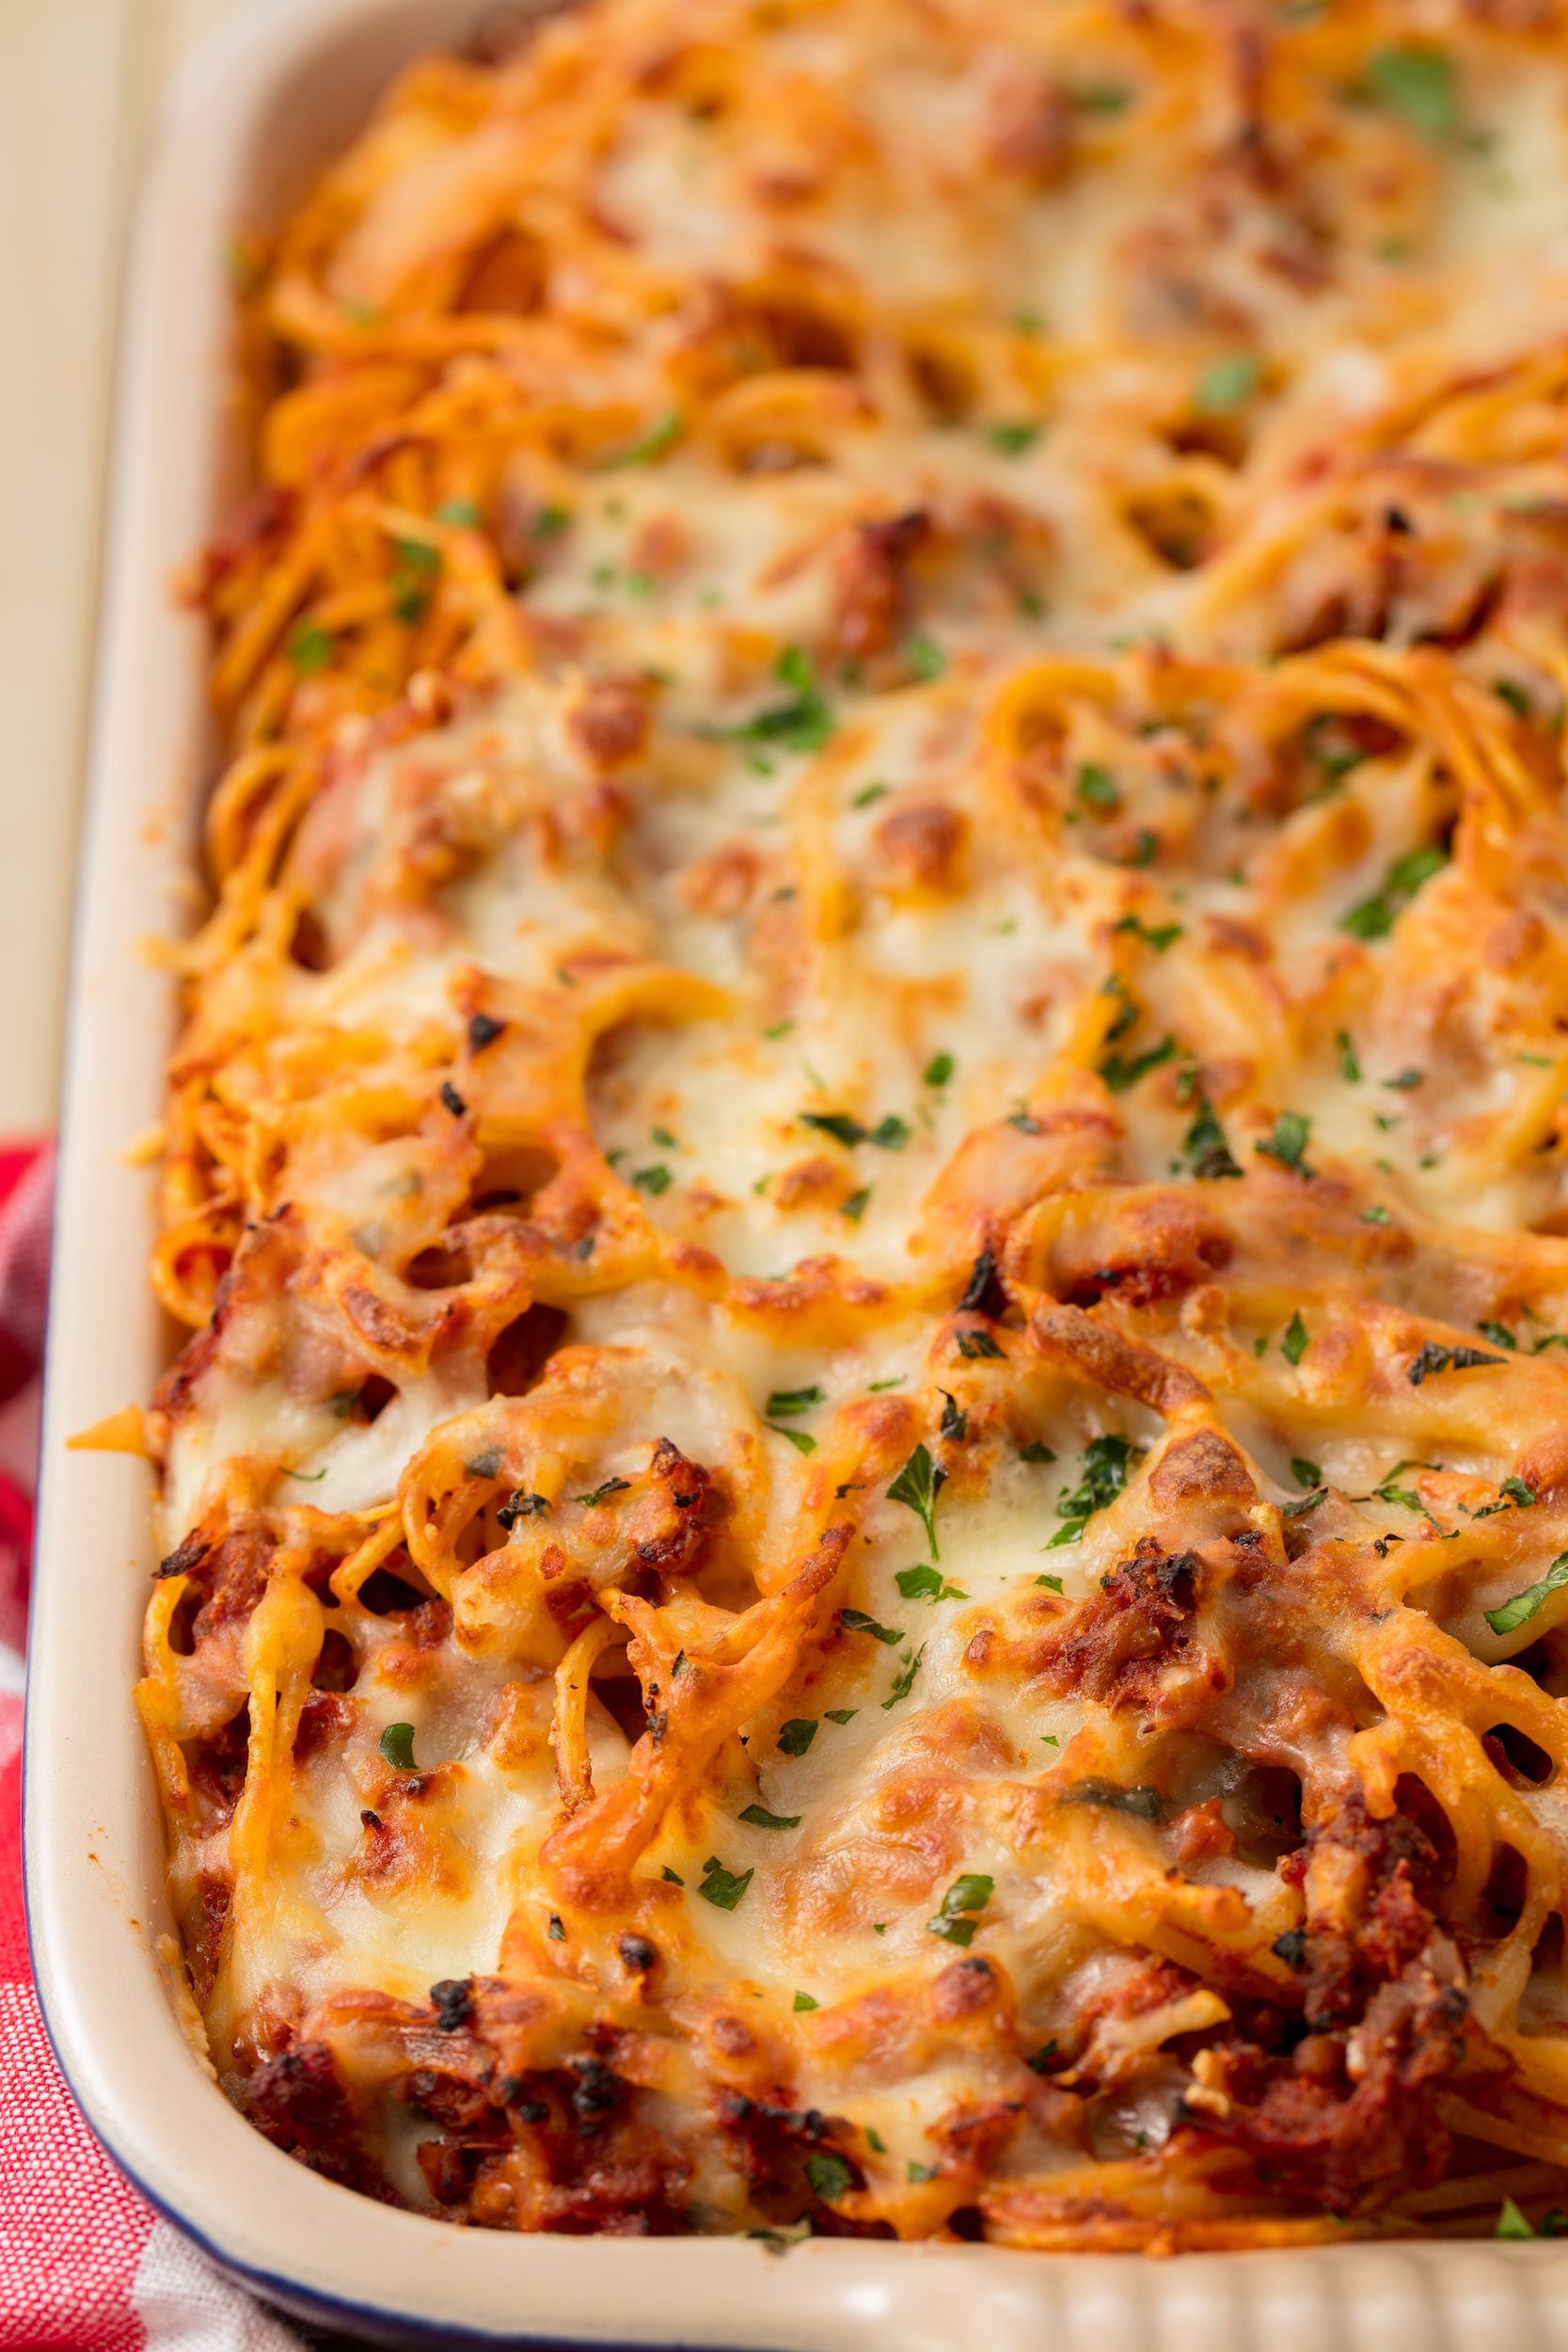 Best Baked Spaghetti Recipe - How to Make Baked Spaghetti Casserole